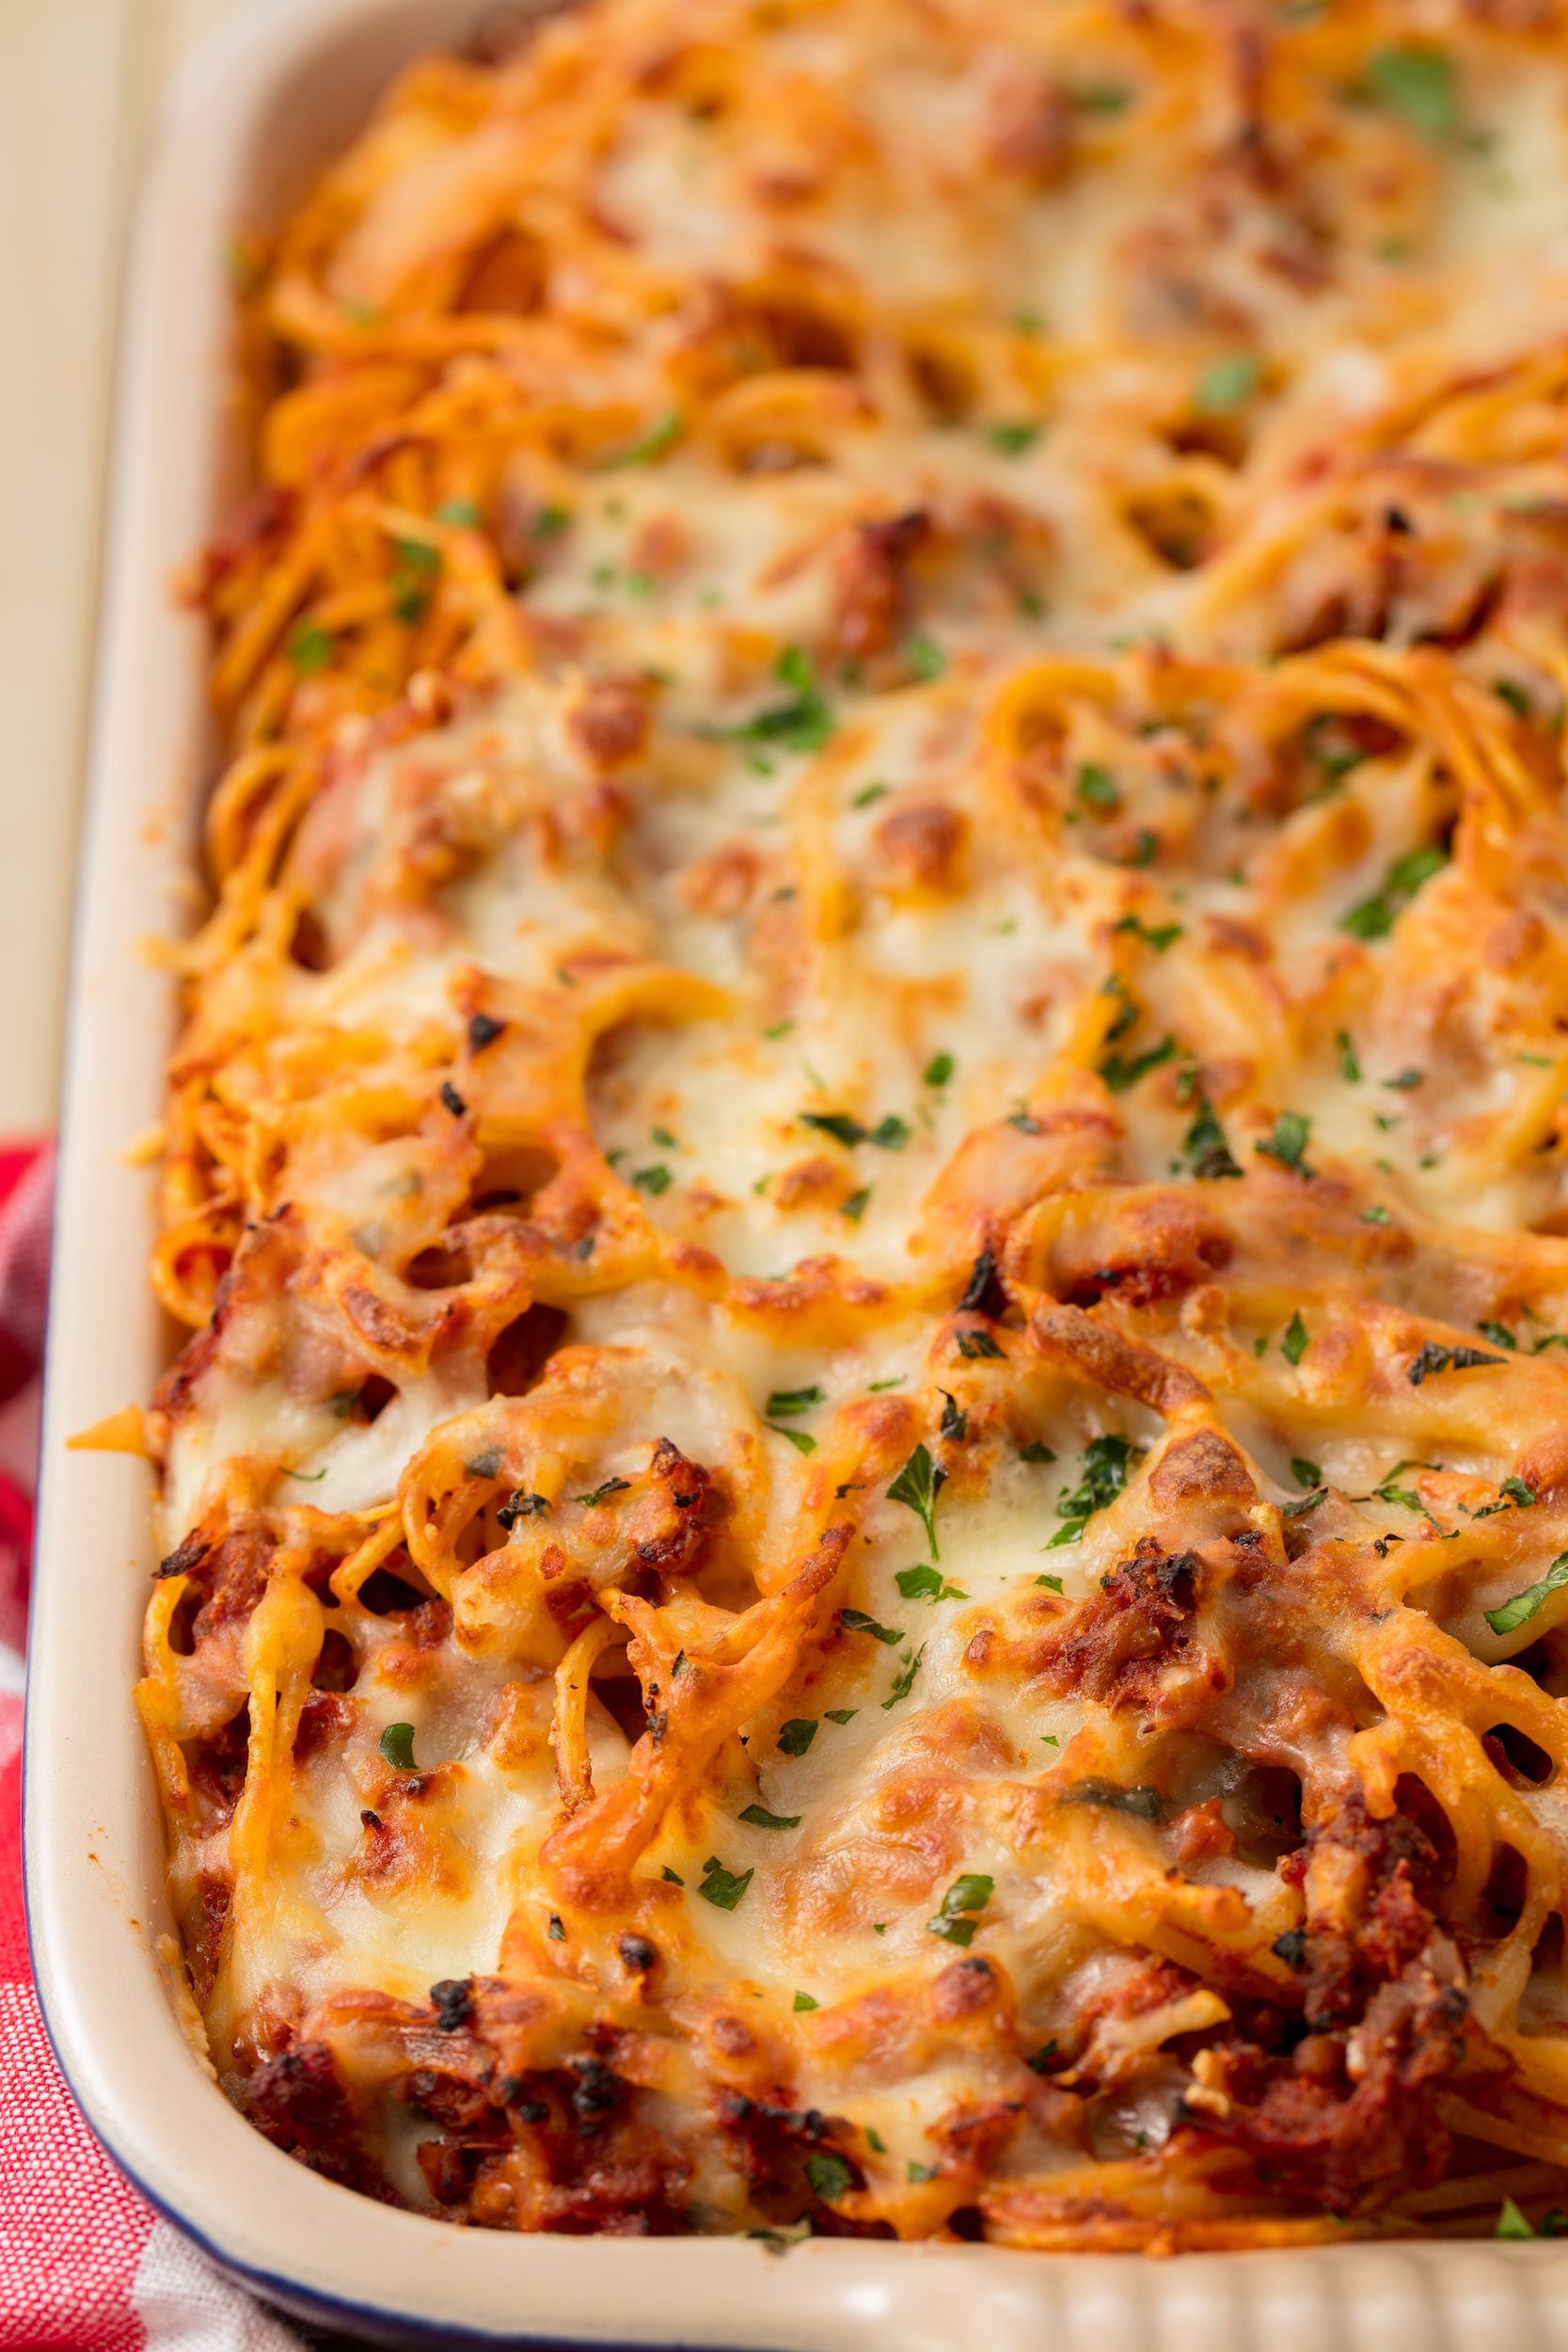 Best Baked Spaghetti Recipe - How to Make Baked Spaghetti Casserole